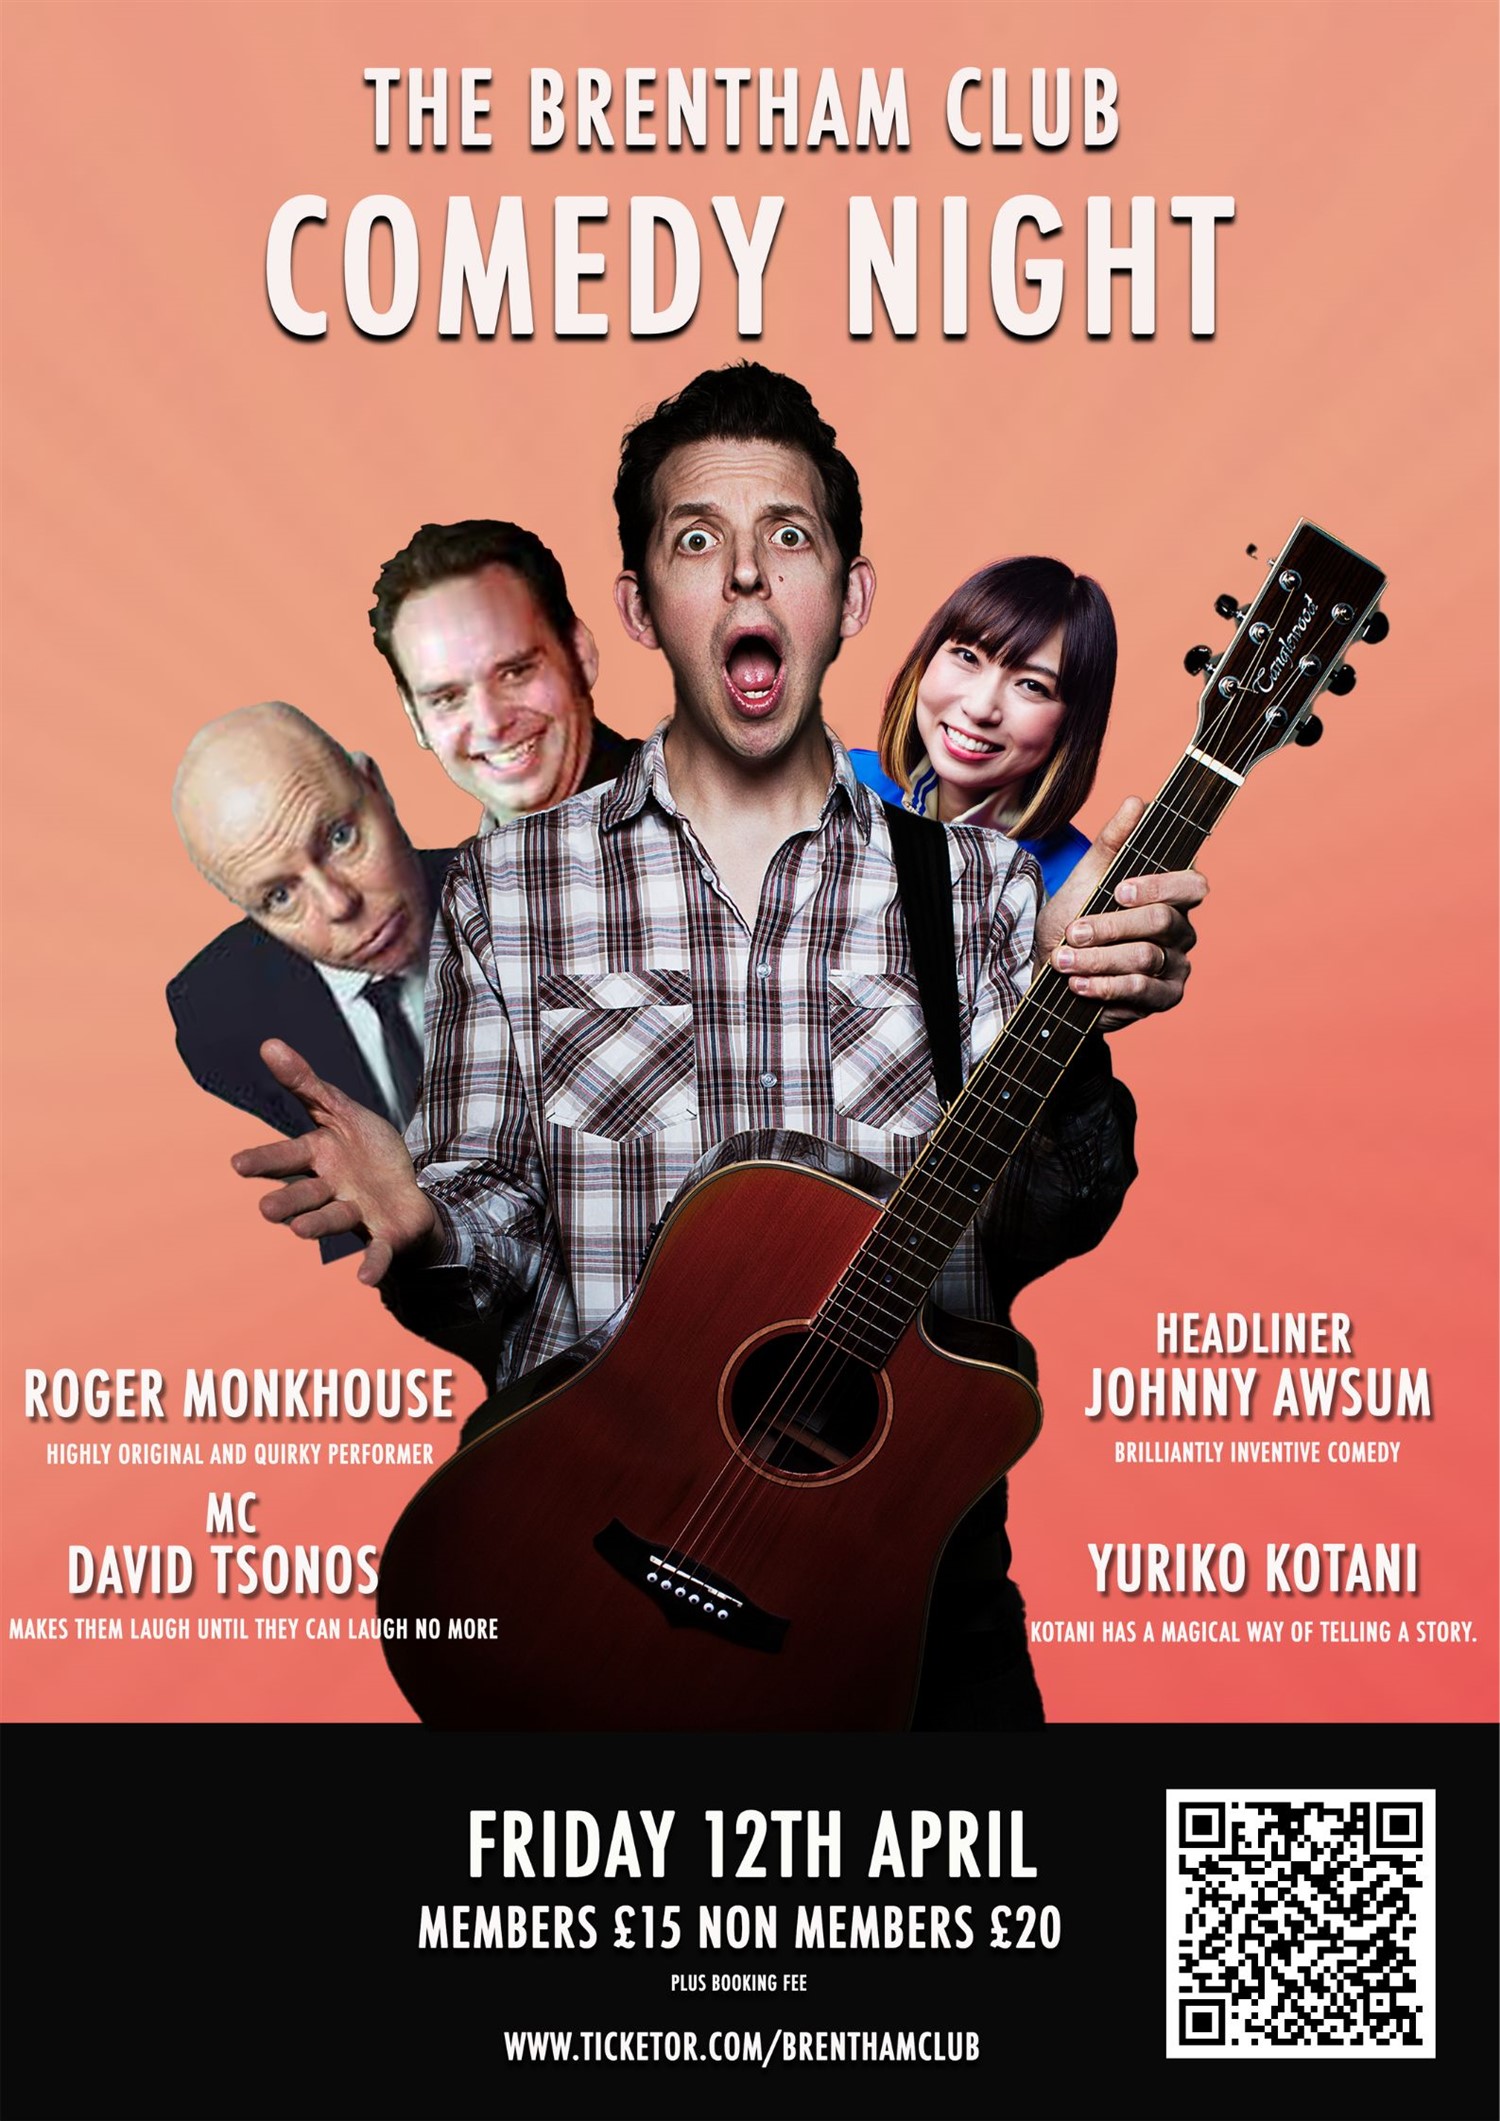 Comedy Night  on abr. 12, 20:00@The Brentham Club - Compra entradas y obtén información enBrenthamclub.co.uk 